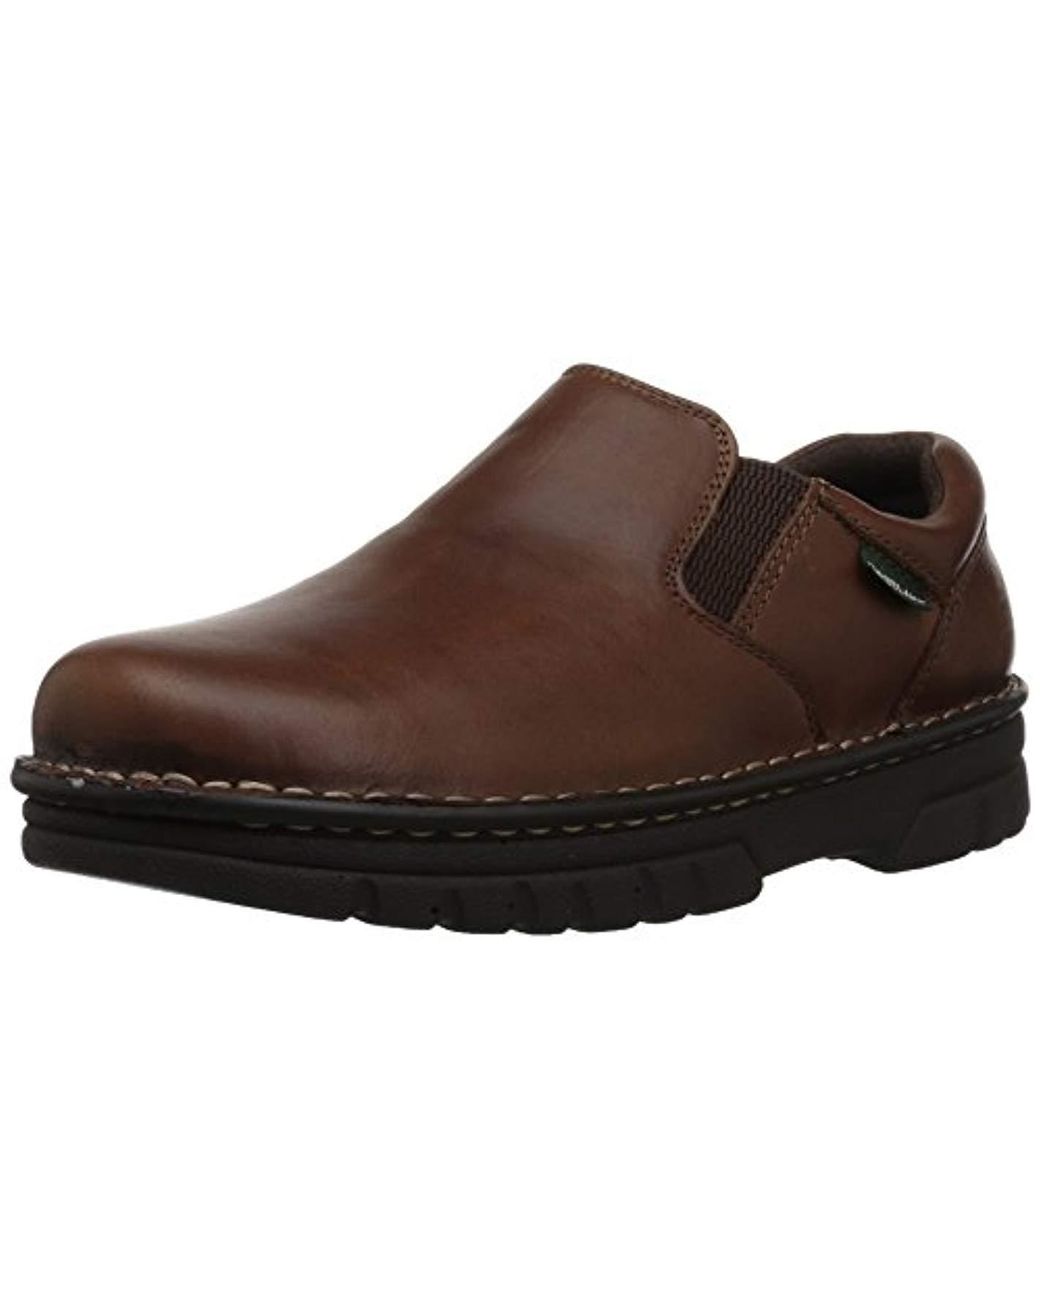 Eastland Leather Newport Slip-on Shoe in Brown for Men - Lyst